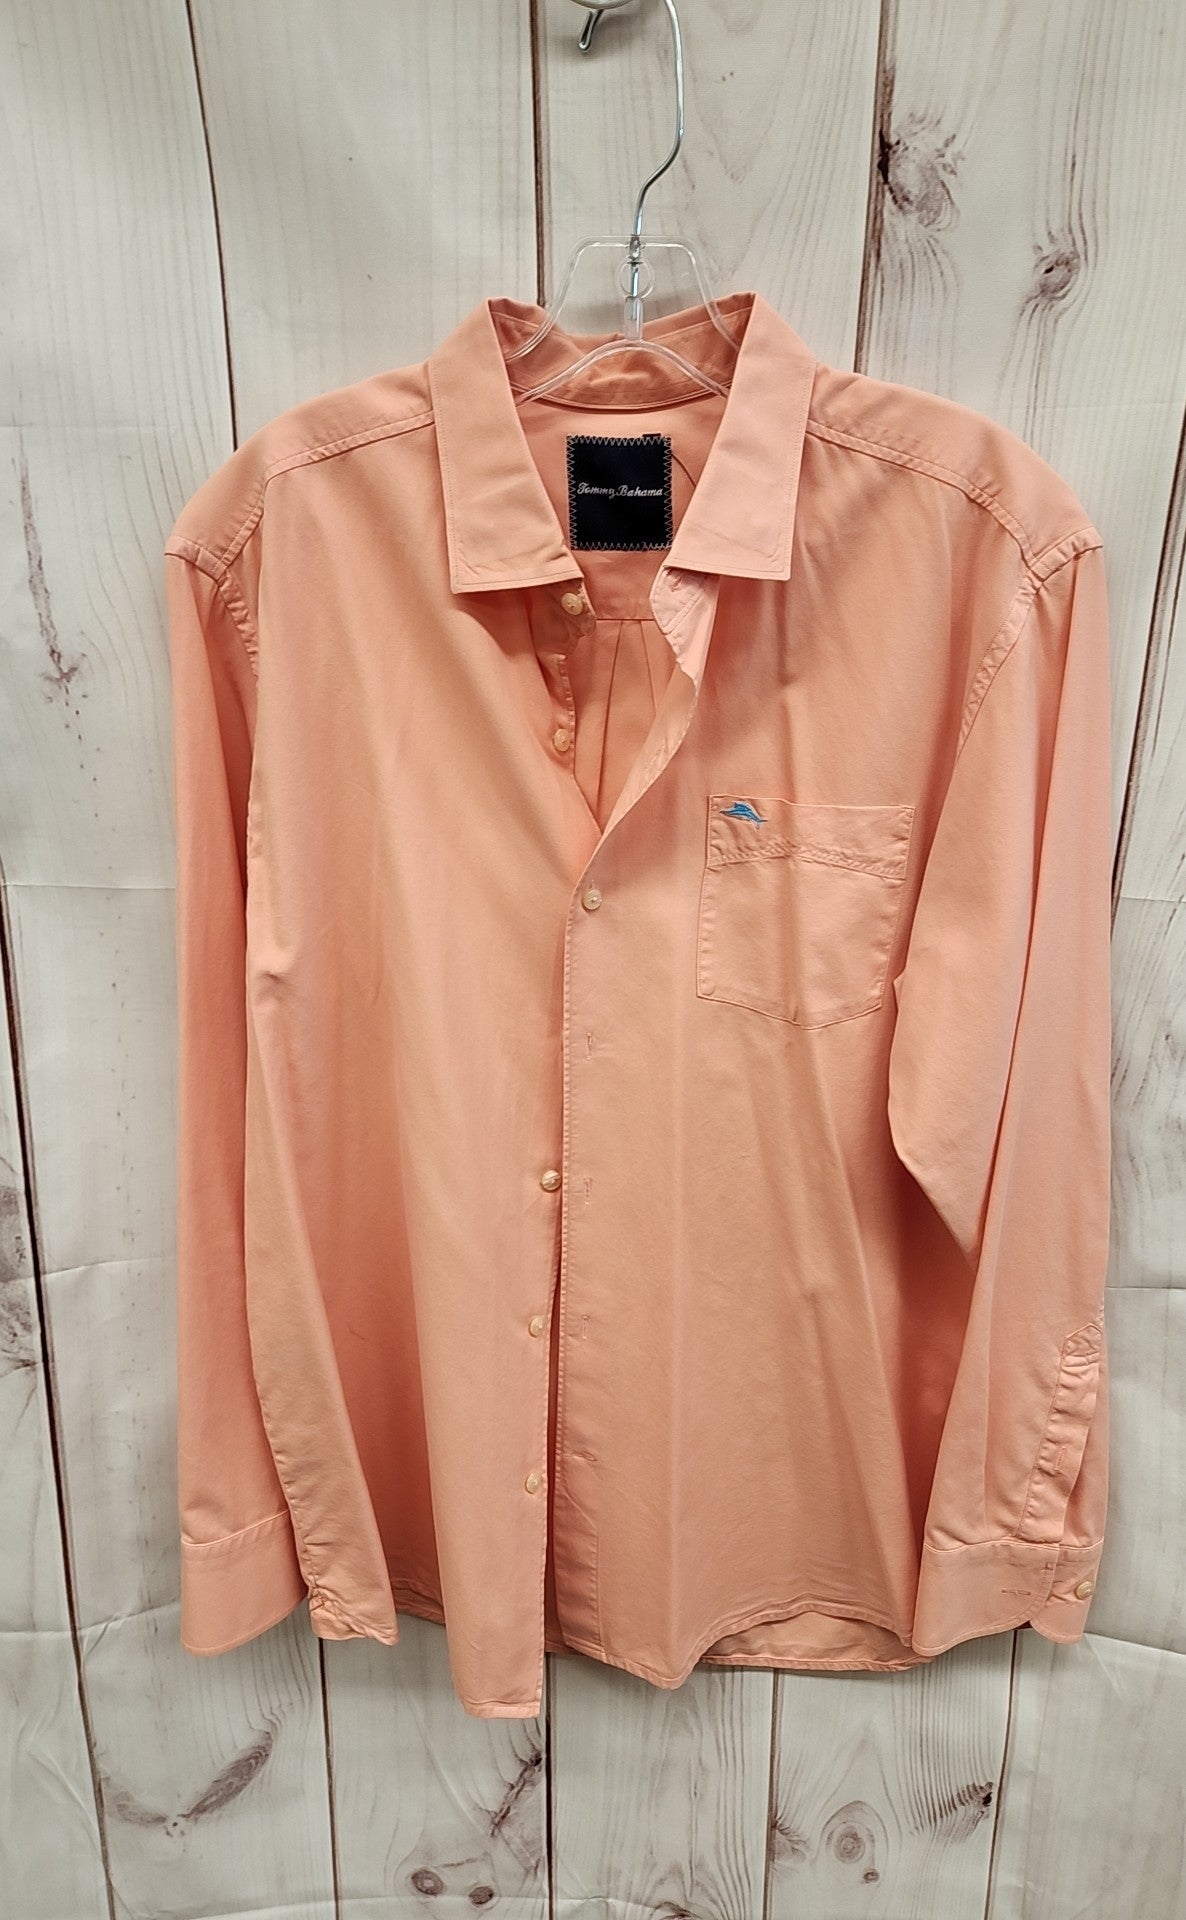 Tommy Bahama Men's Size M Peach Shirt